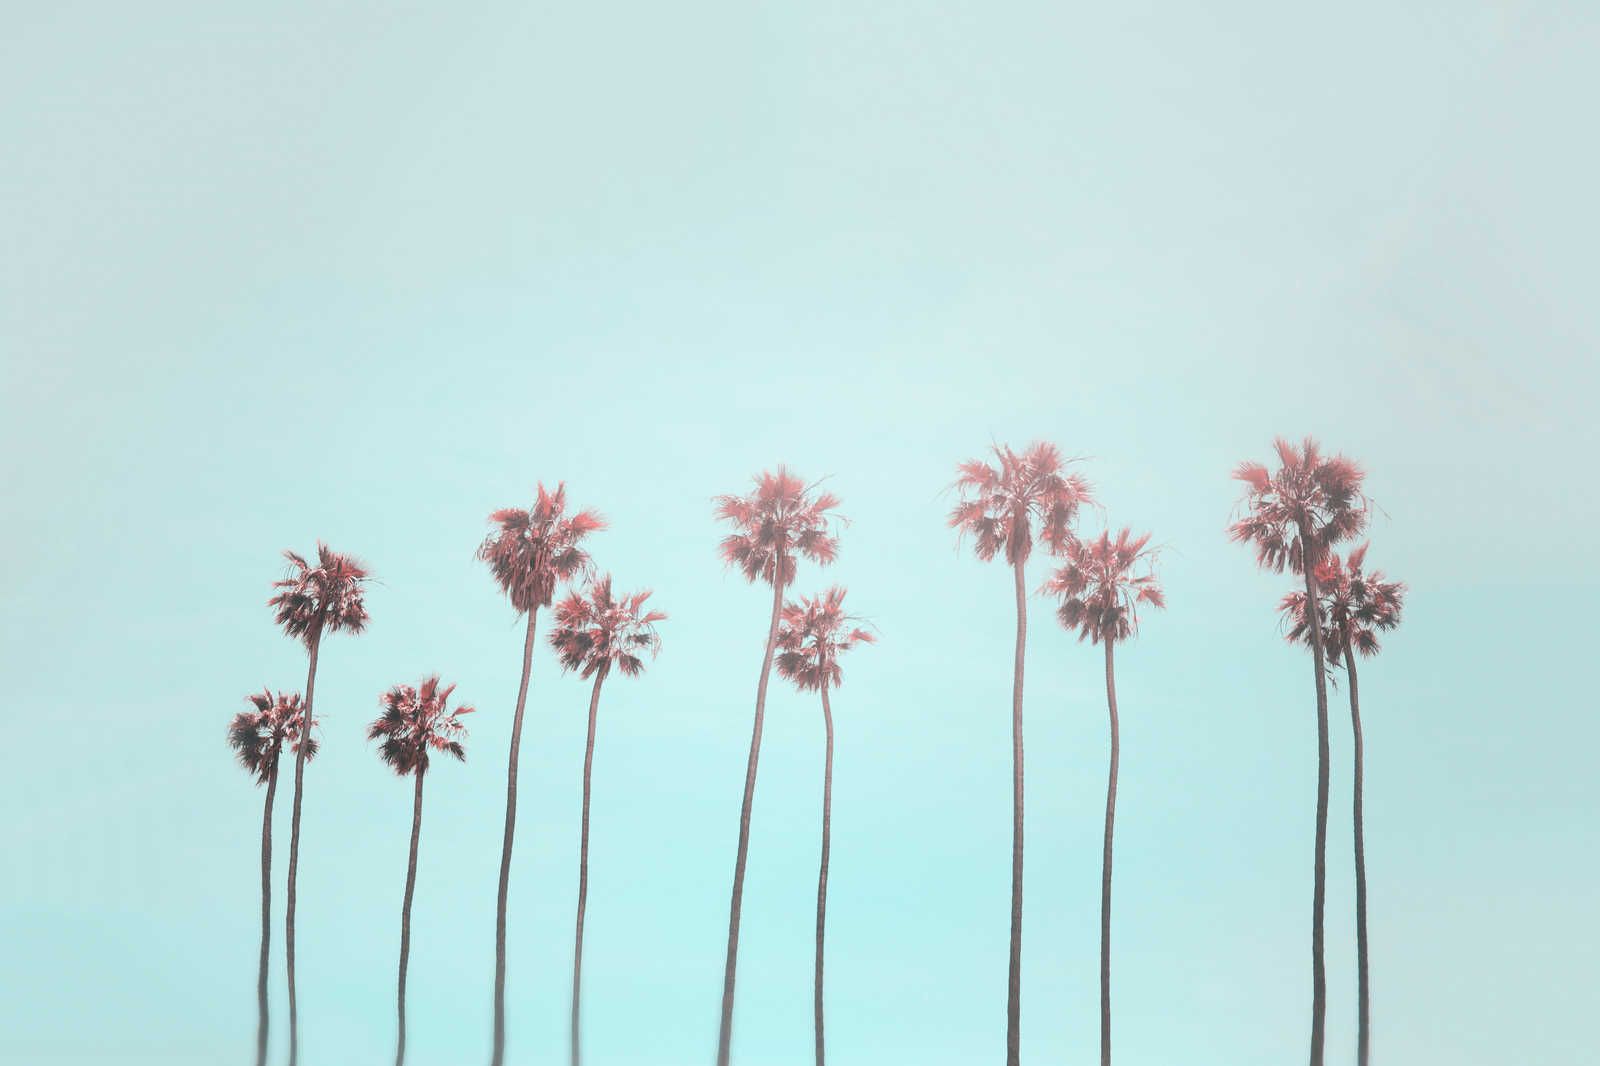             Leinwandbild Palmen & Himmel für Strandfeeling in Türkis & Pink – 1,20 m x 0,80 m
        